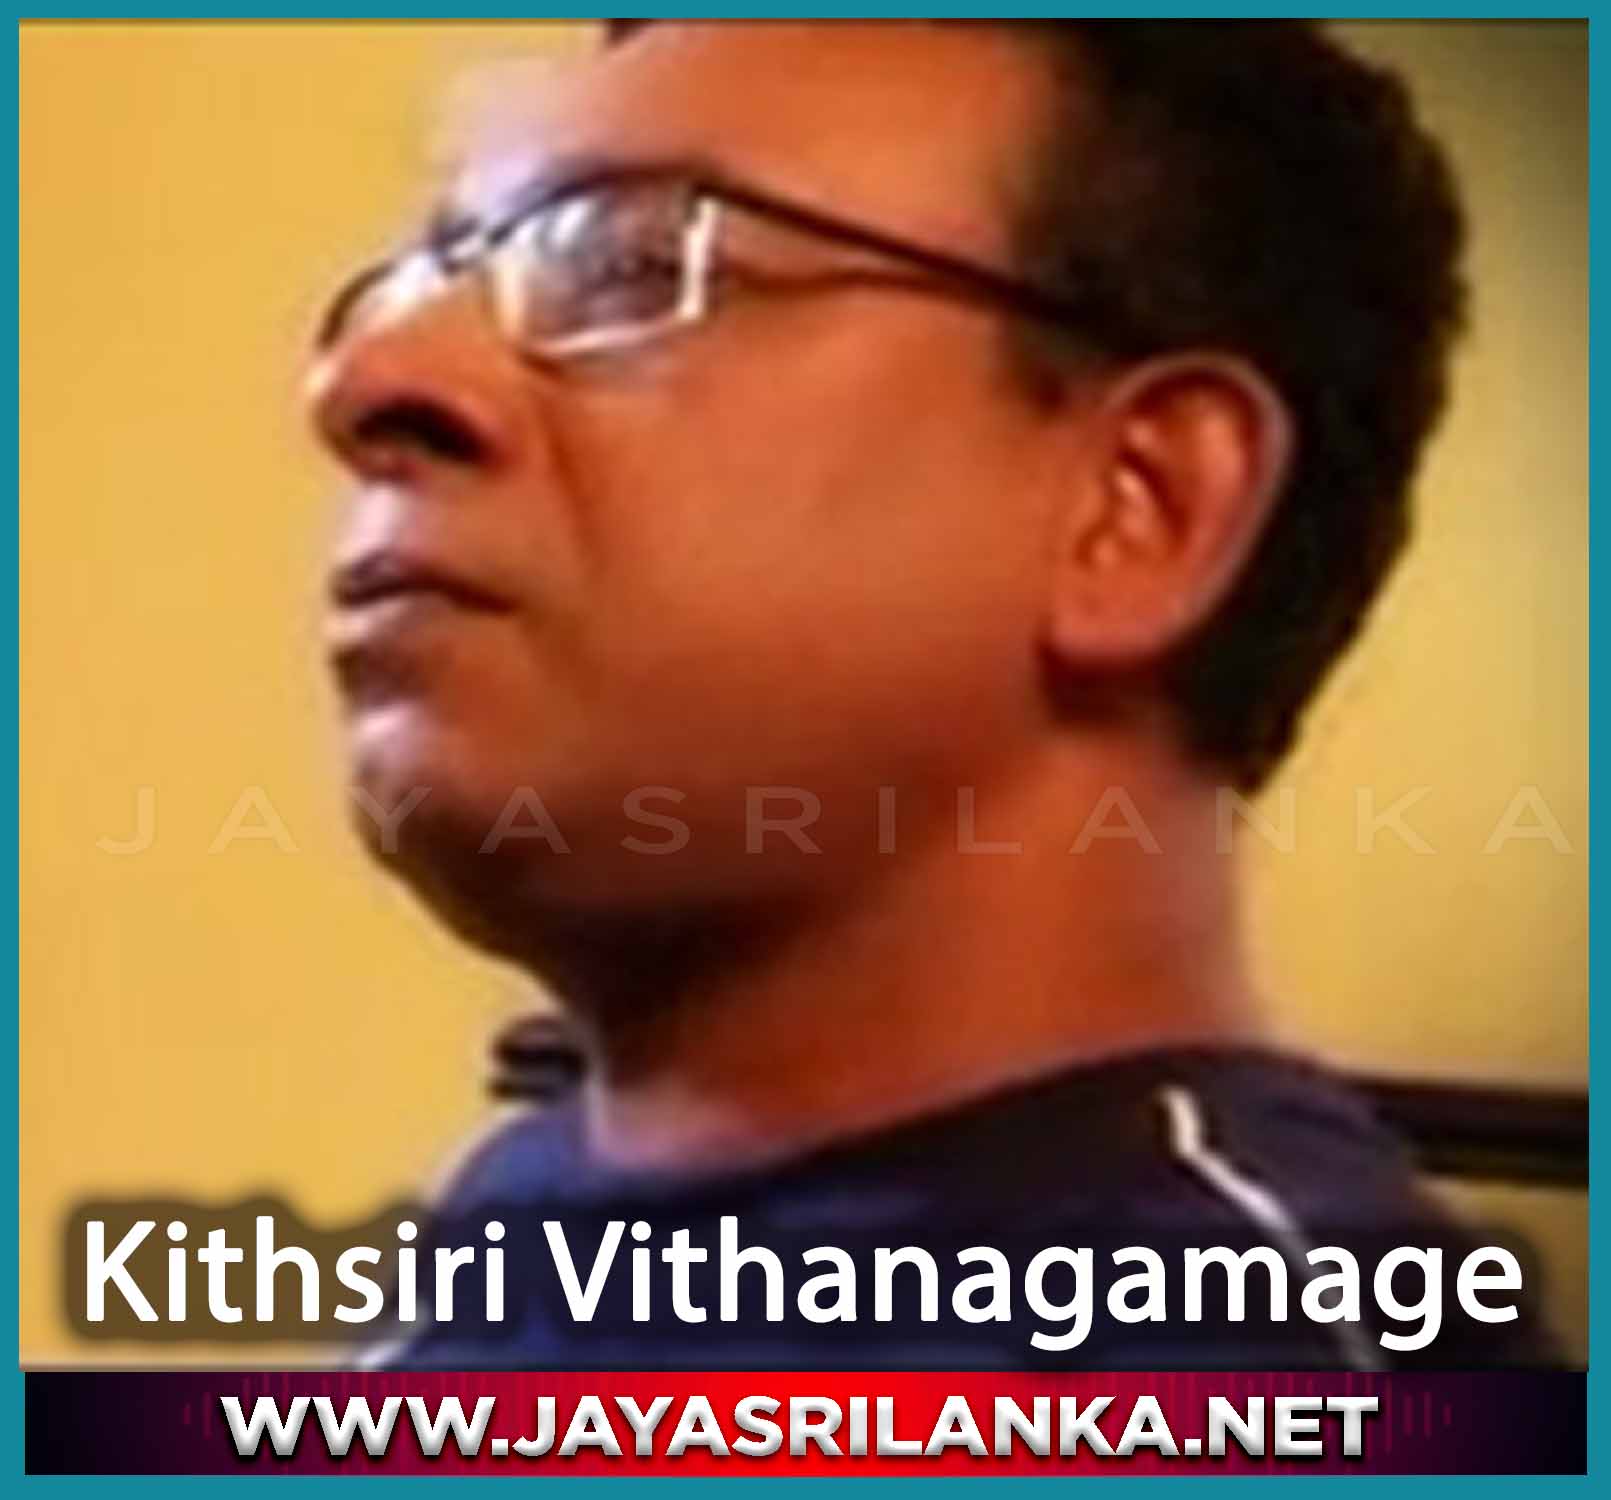 Landun Wana Uyan - Kithsiri Vithanagamage And Nelu Adikari mp3 Image